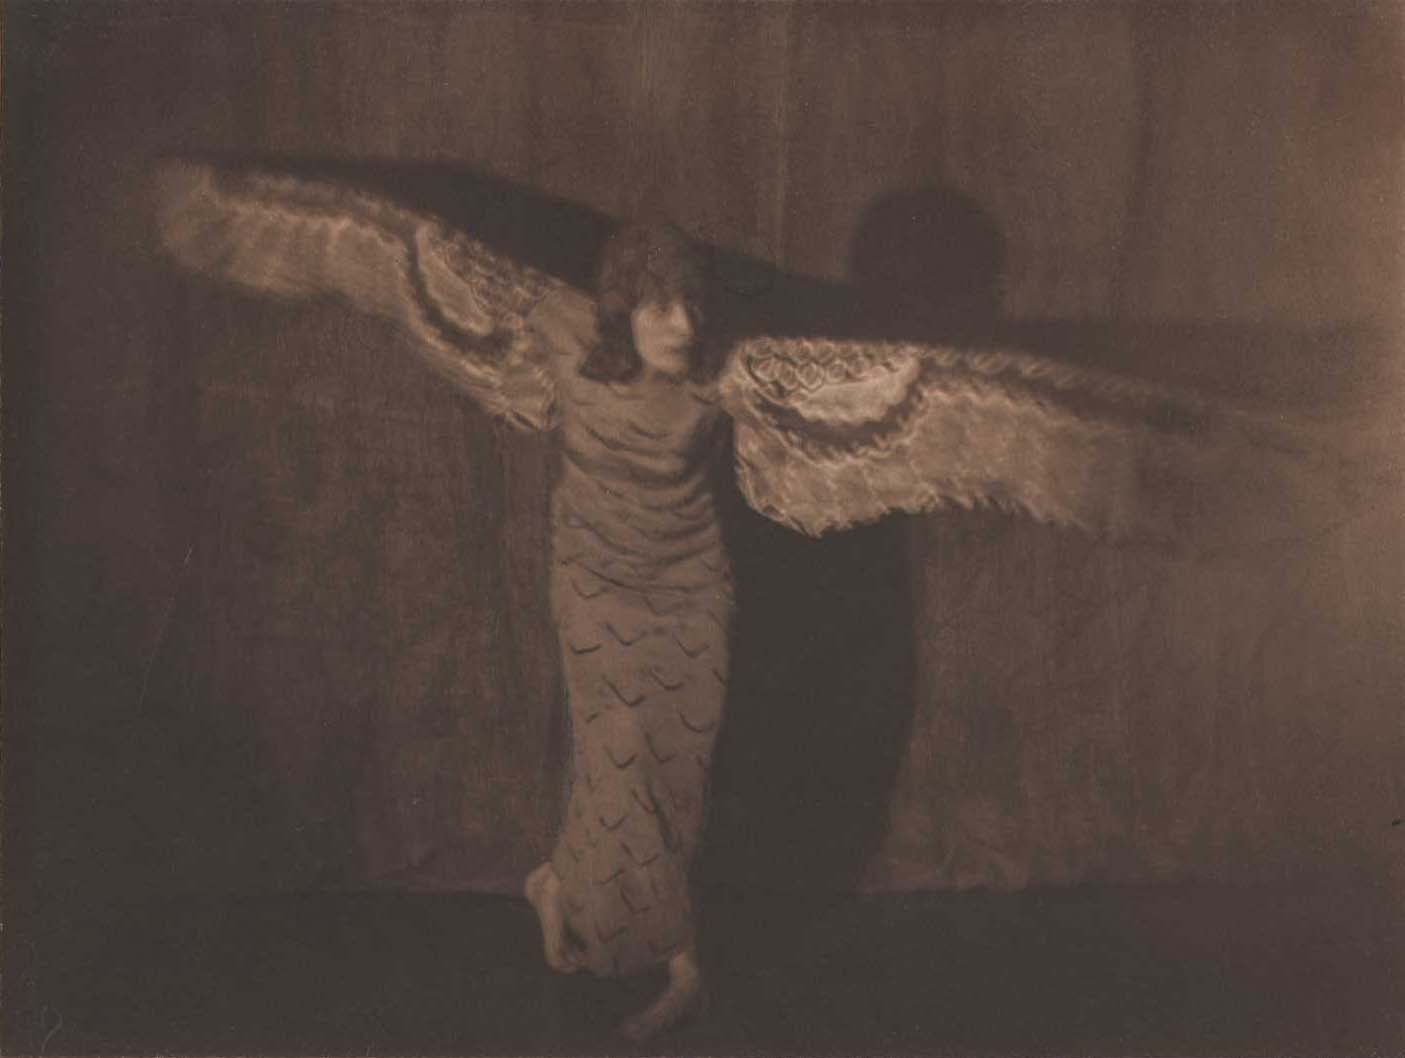 Delight Weston :: Winged Dancer on Stage, 1927. Palladium print. | src Photoseed